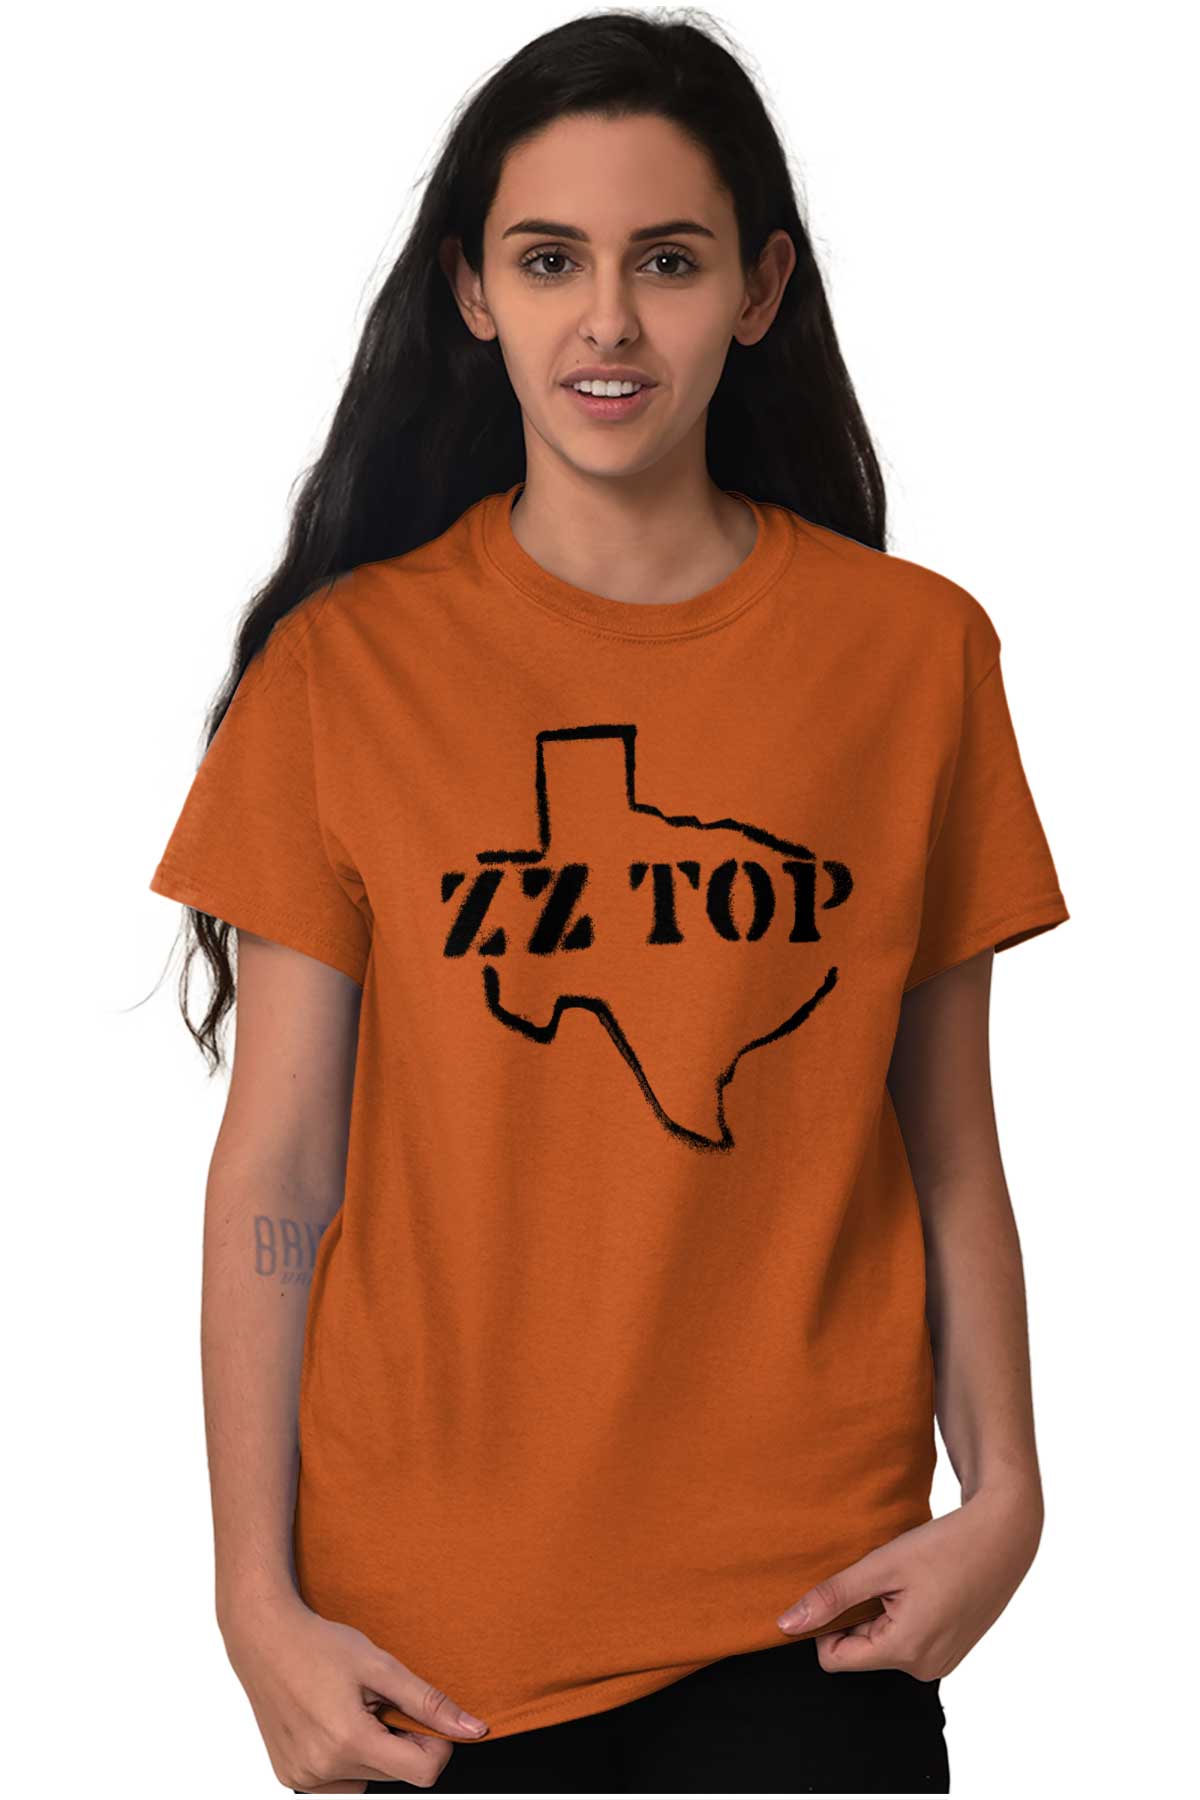 ZZ Top Official Concert Merch 80s Men's Graphic T Shirt Tees Brisco Brands 3X - image 3 of 6